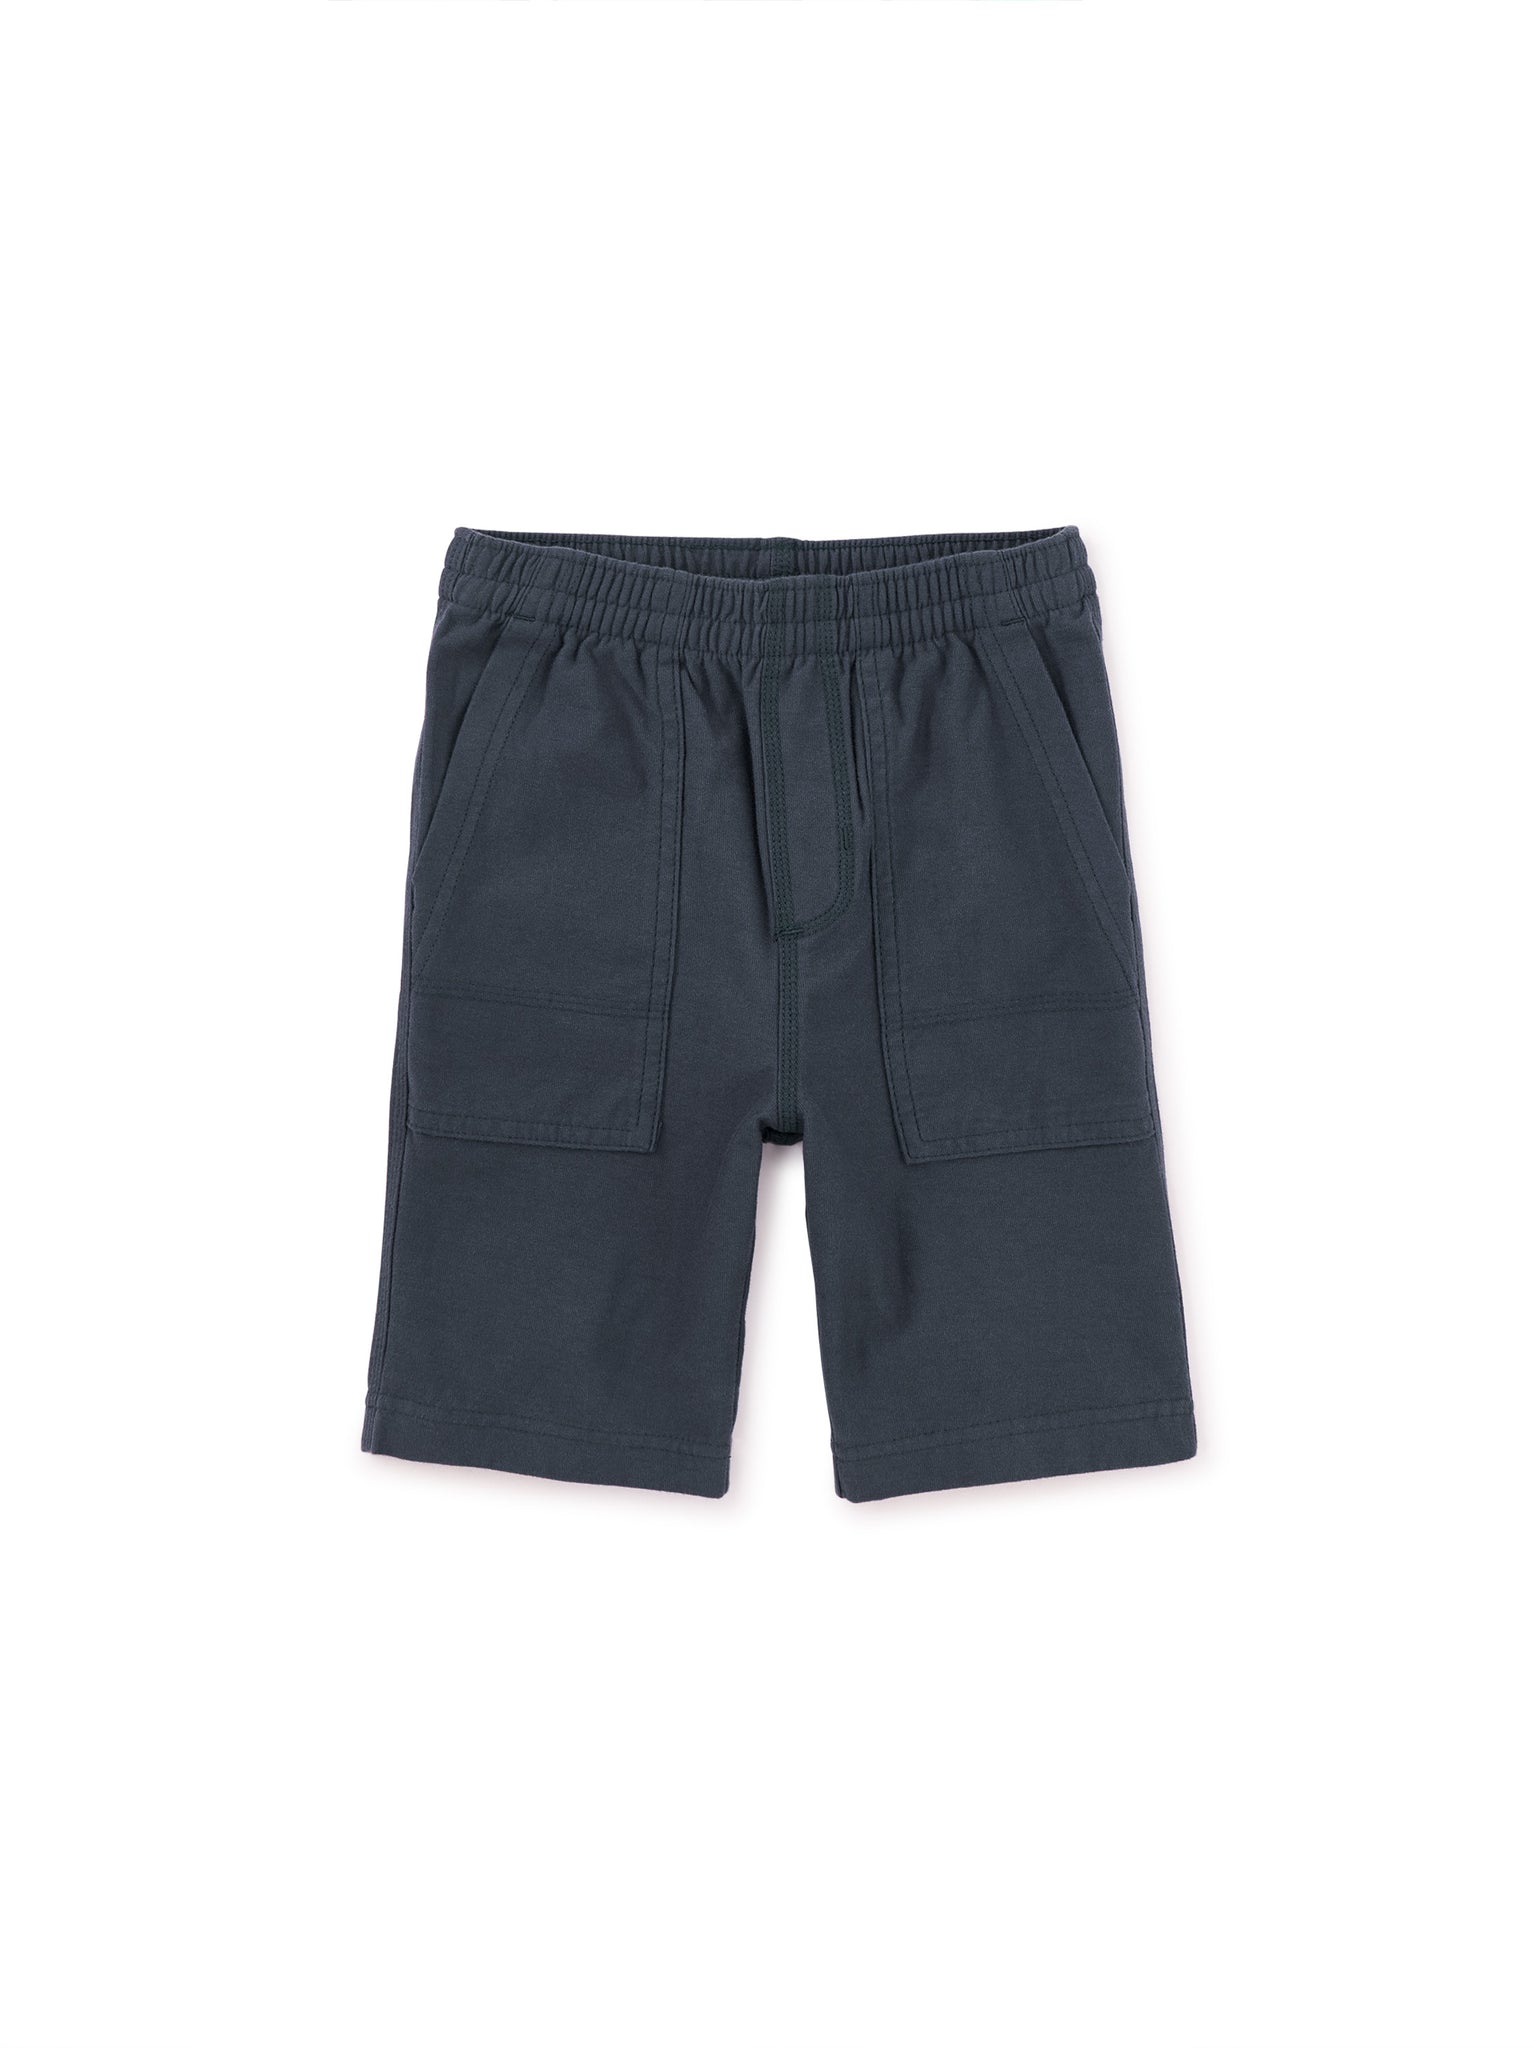 Playwear Shorts / Indigo